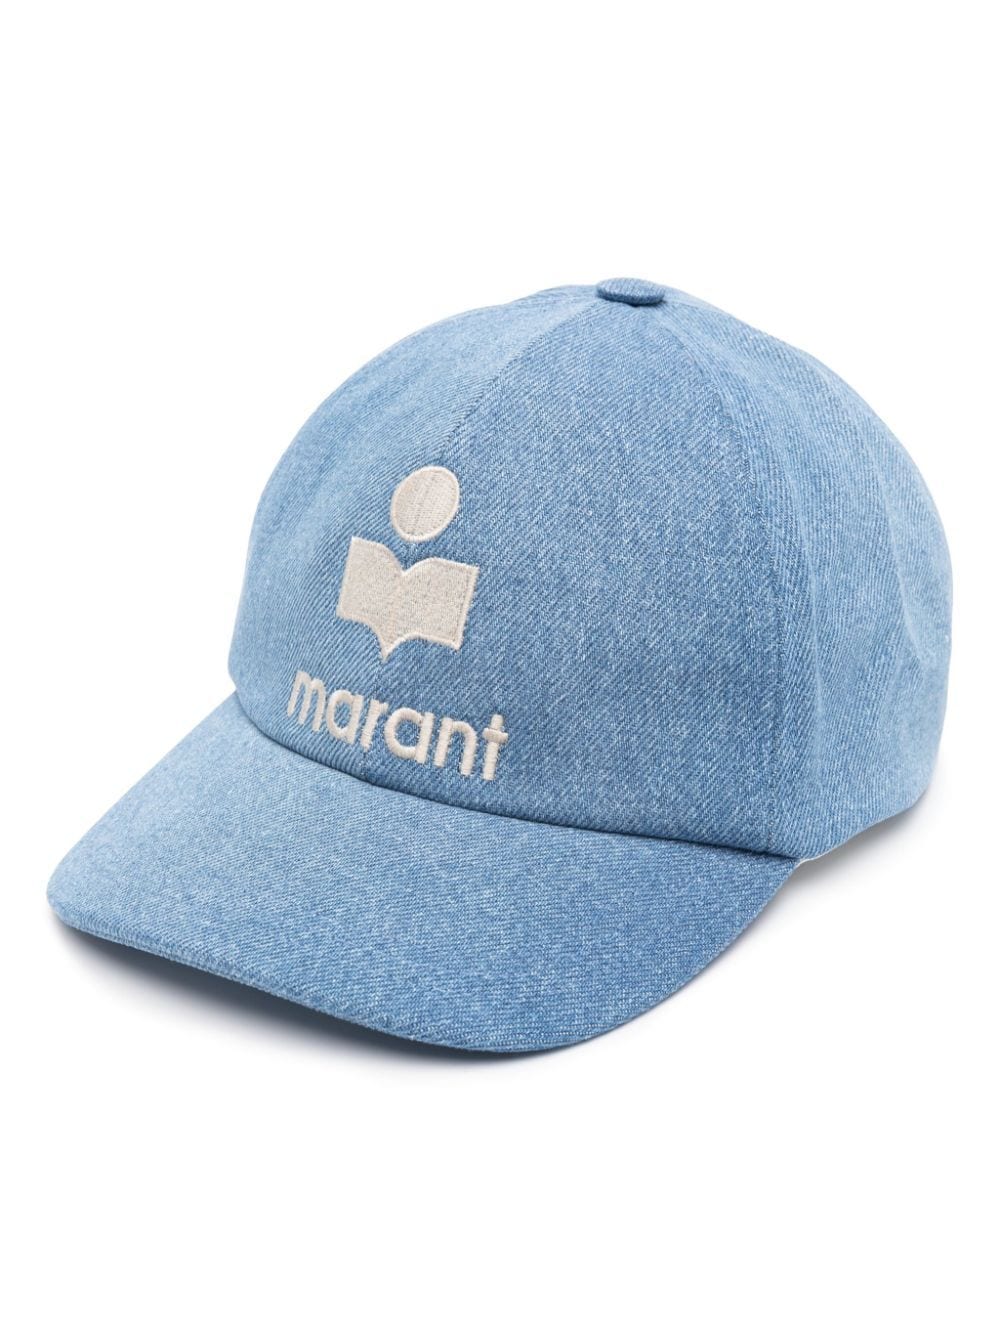 MARANT TYRON LOGO-EMBROIDERED CAP